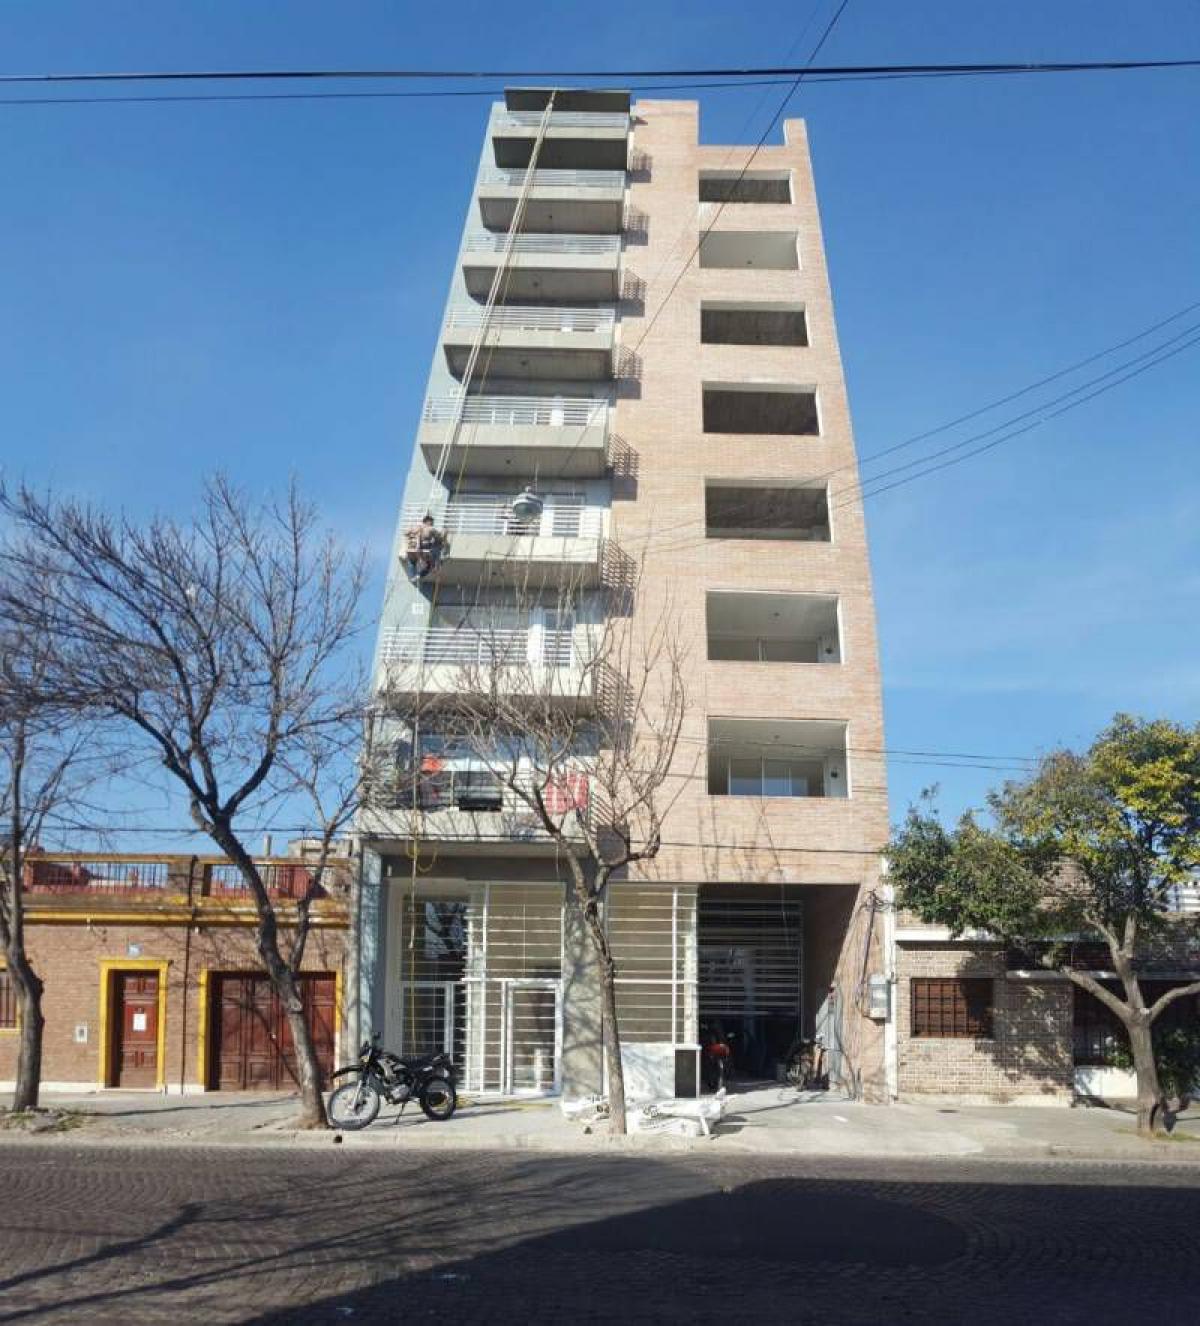 Picture of Apartment For Sale in Santa Fe, Santa Fe, Argentina